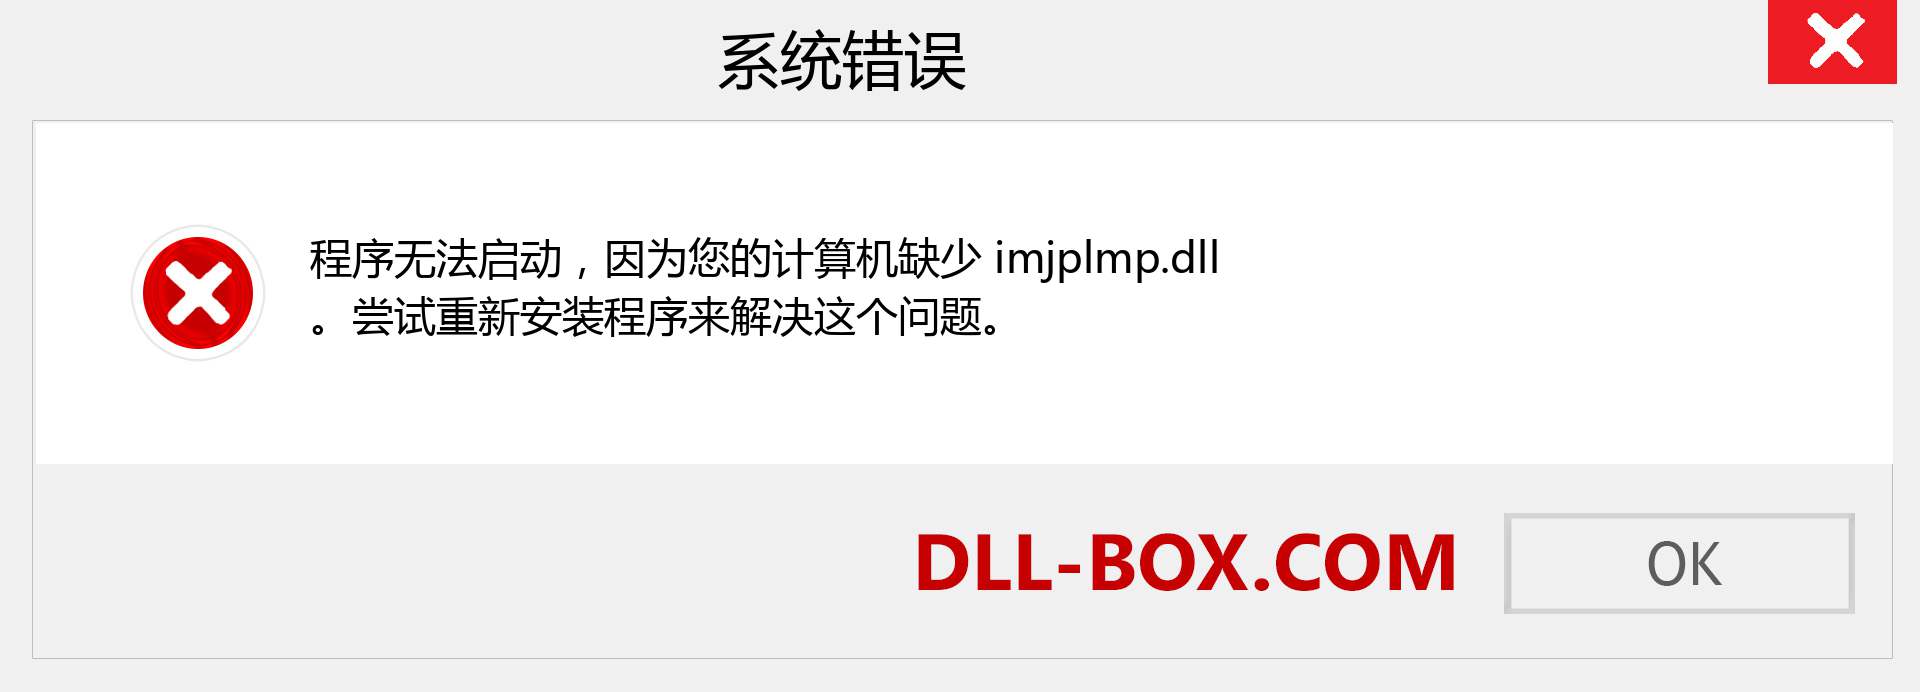 imjplmp.dll 文件丢失？。 适用于 Windows 7、8、10 的下载 - 修复 Windows、照片、图像上的 imjplmp dll 丢失错误